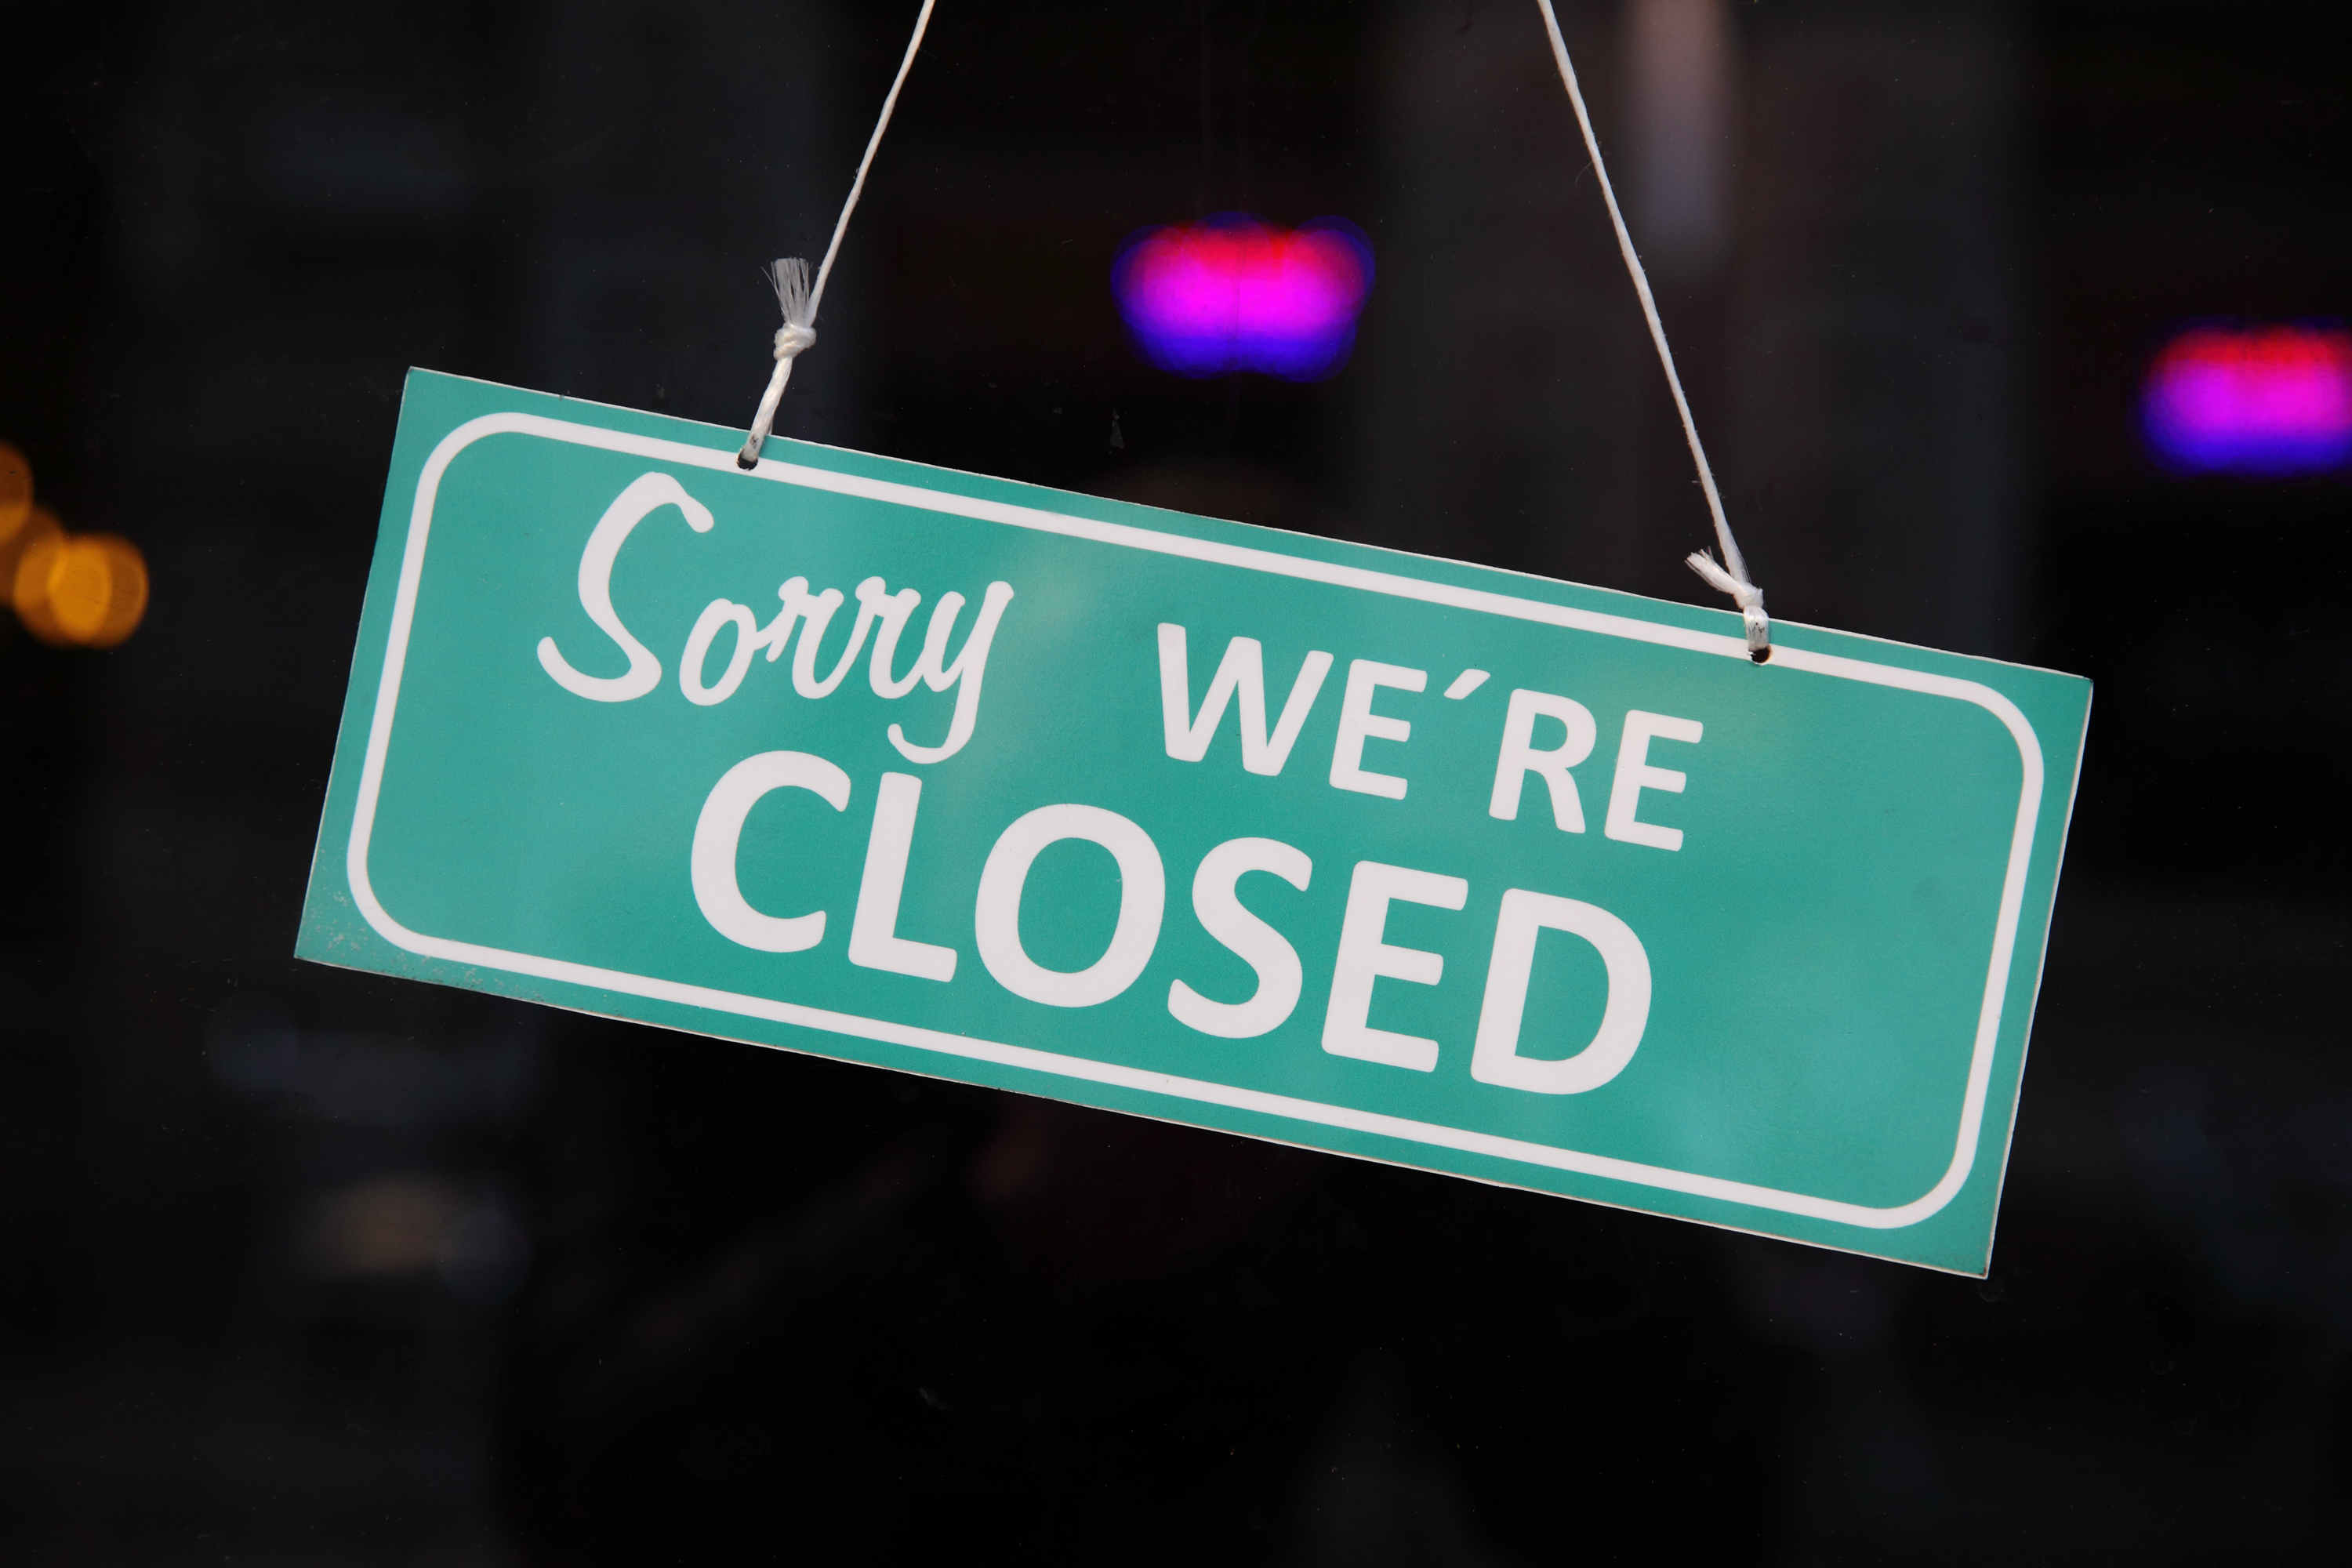 All London Pubs Bars Cafés And Restaurants Will Close Their Doors Tonight